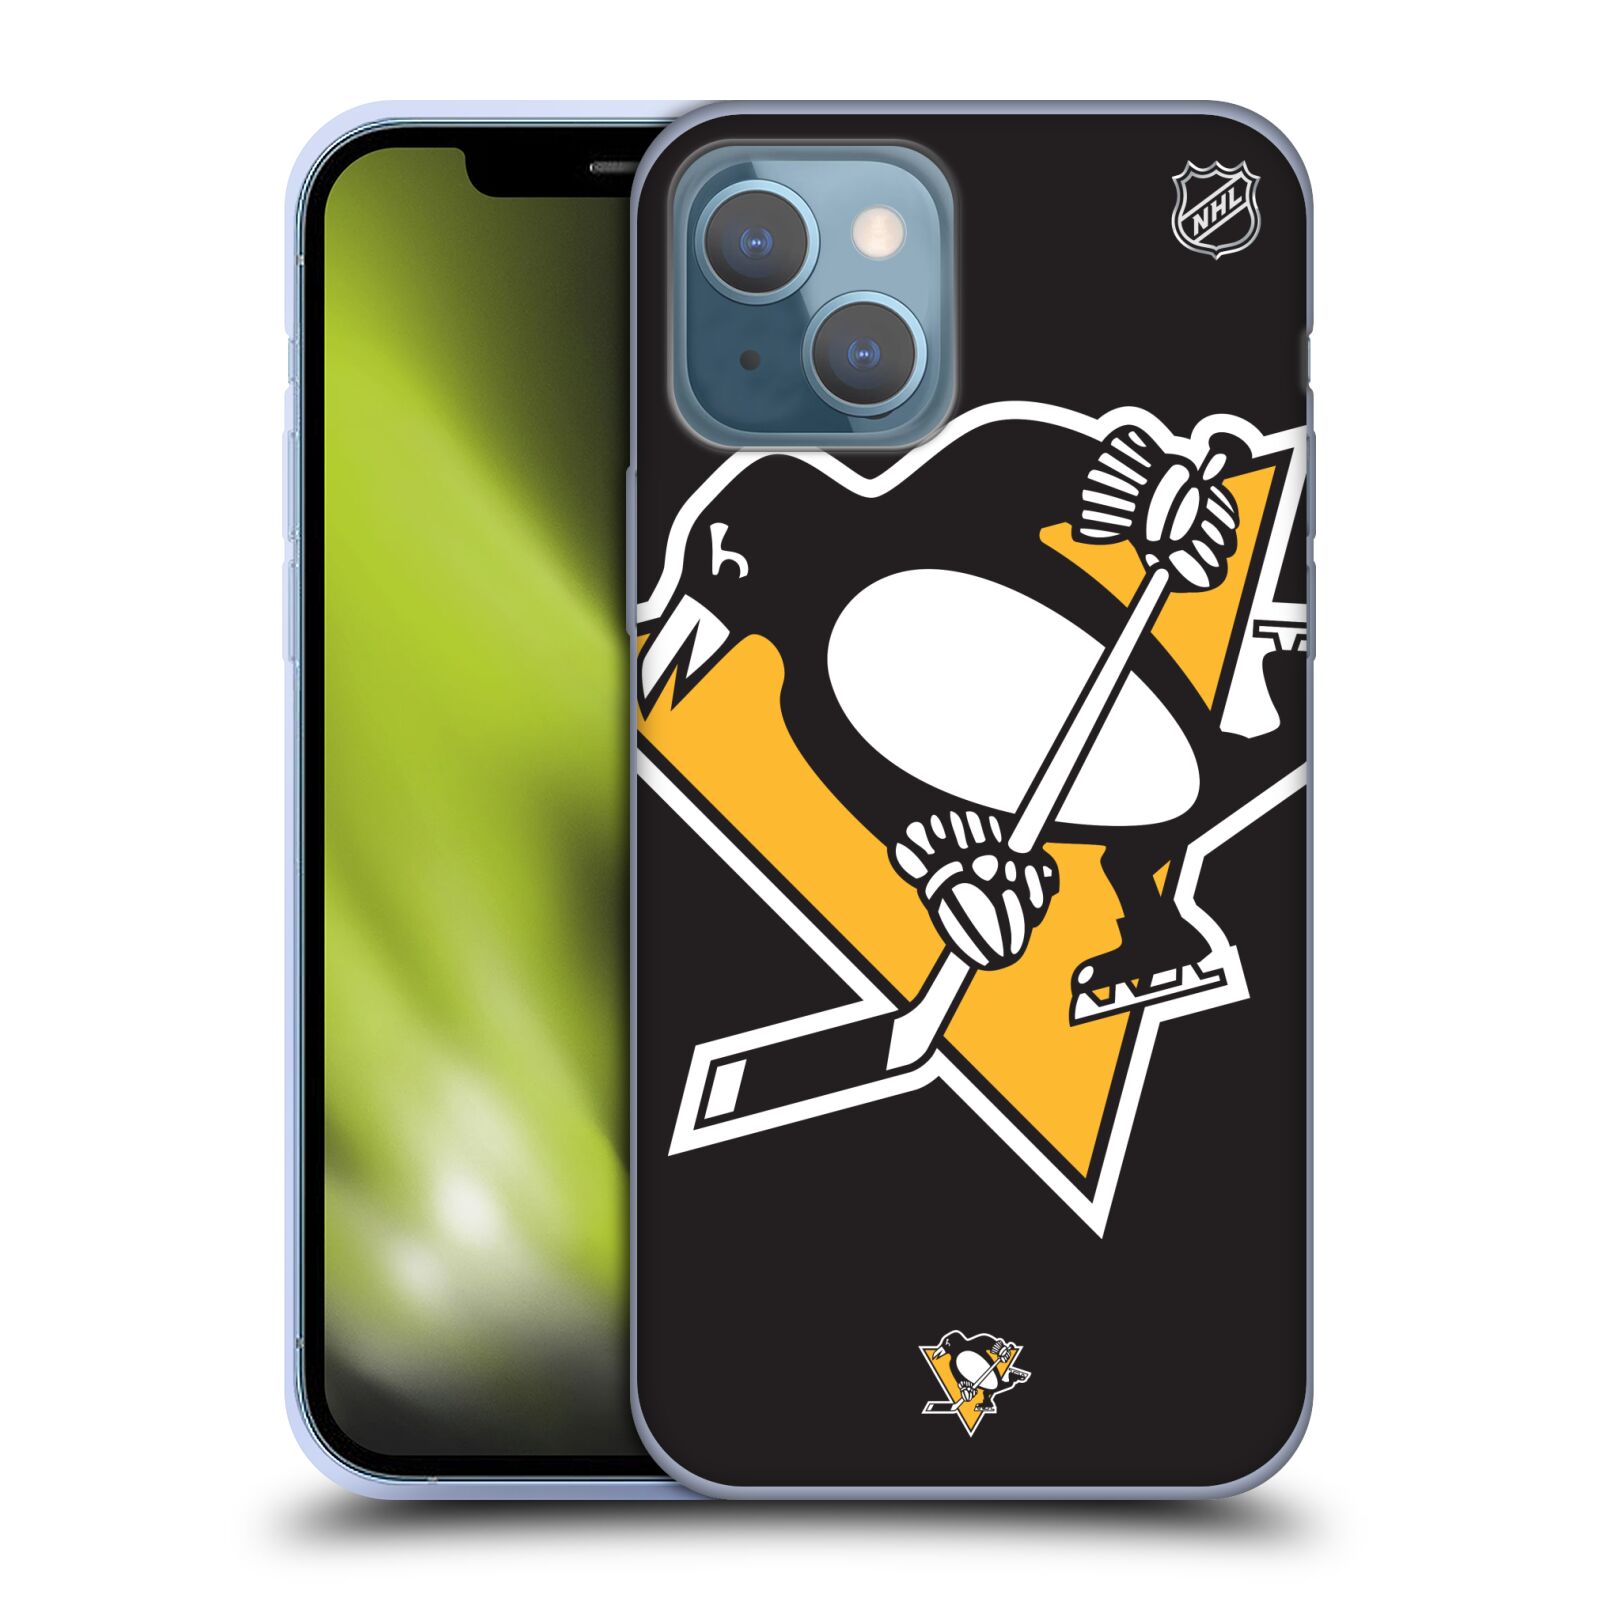 Silikonové pouzdro na mobil Apple iPhone 13 - NHL - Velké logo Pittsburgh Penguins (Silikonový kryt, obal, pouzdro na mobilní telefon Apple iPhone 13 s licencovaným motivem NHL - Velké logo Pittsburgh Penguins)